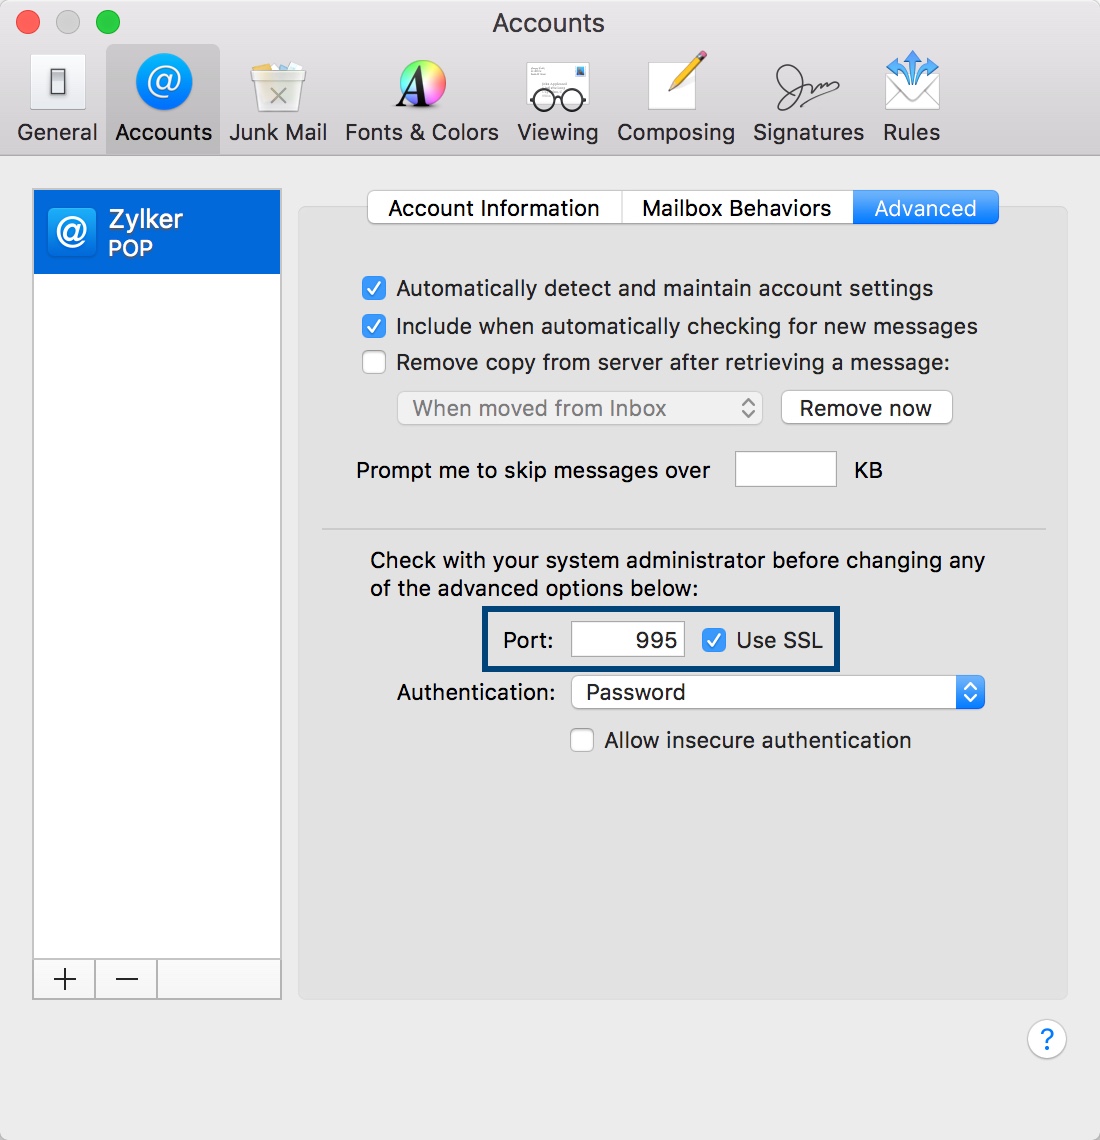 godaddy email setup for mac mail